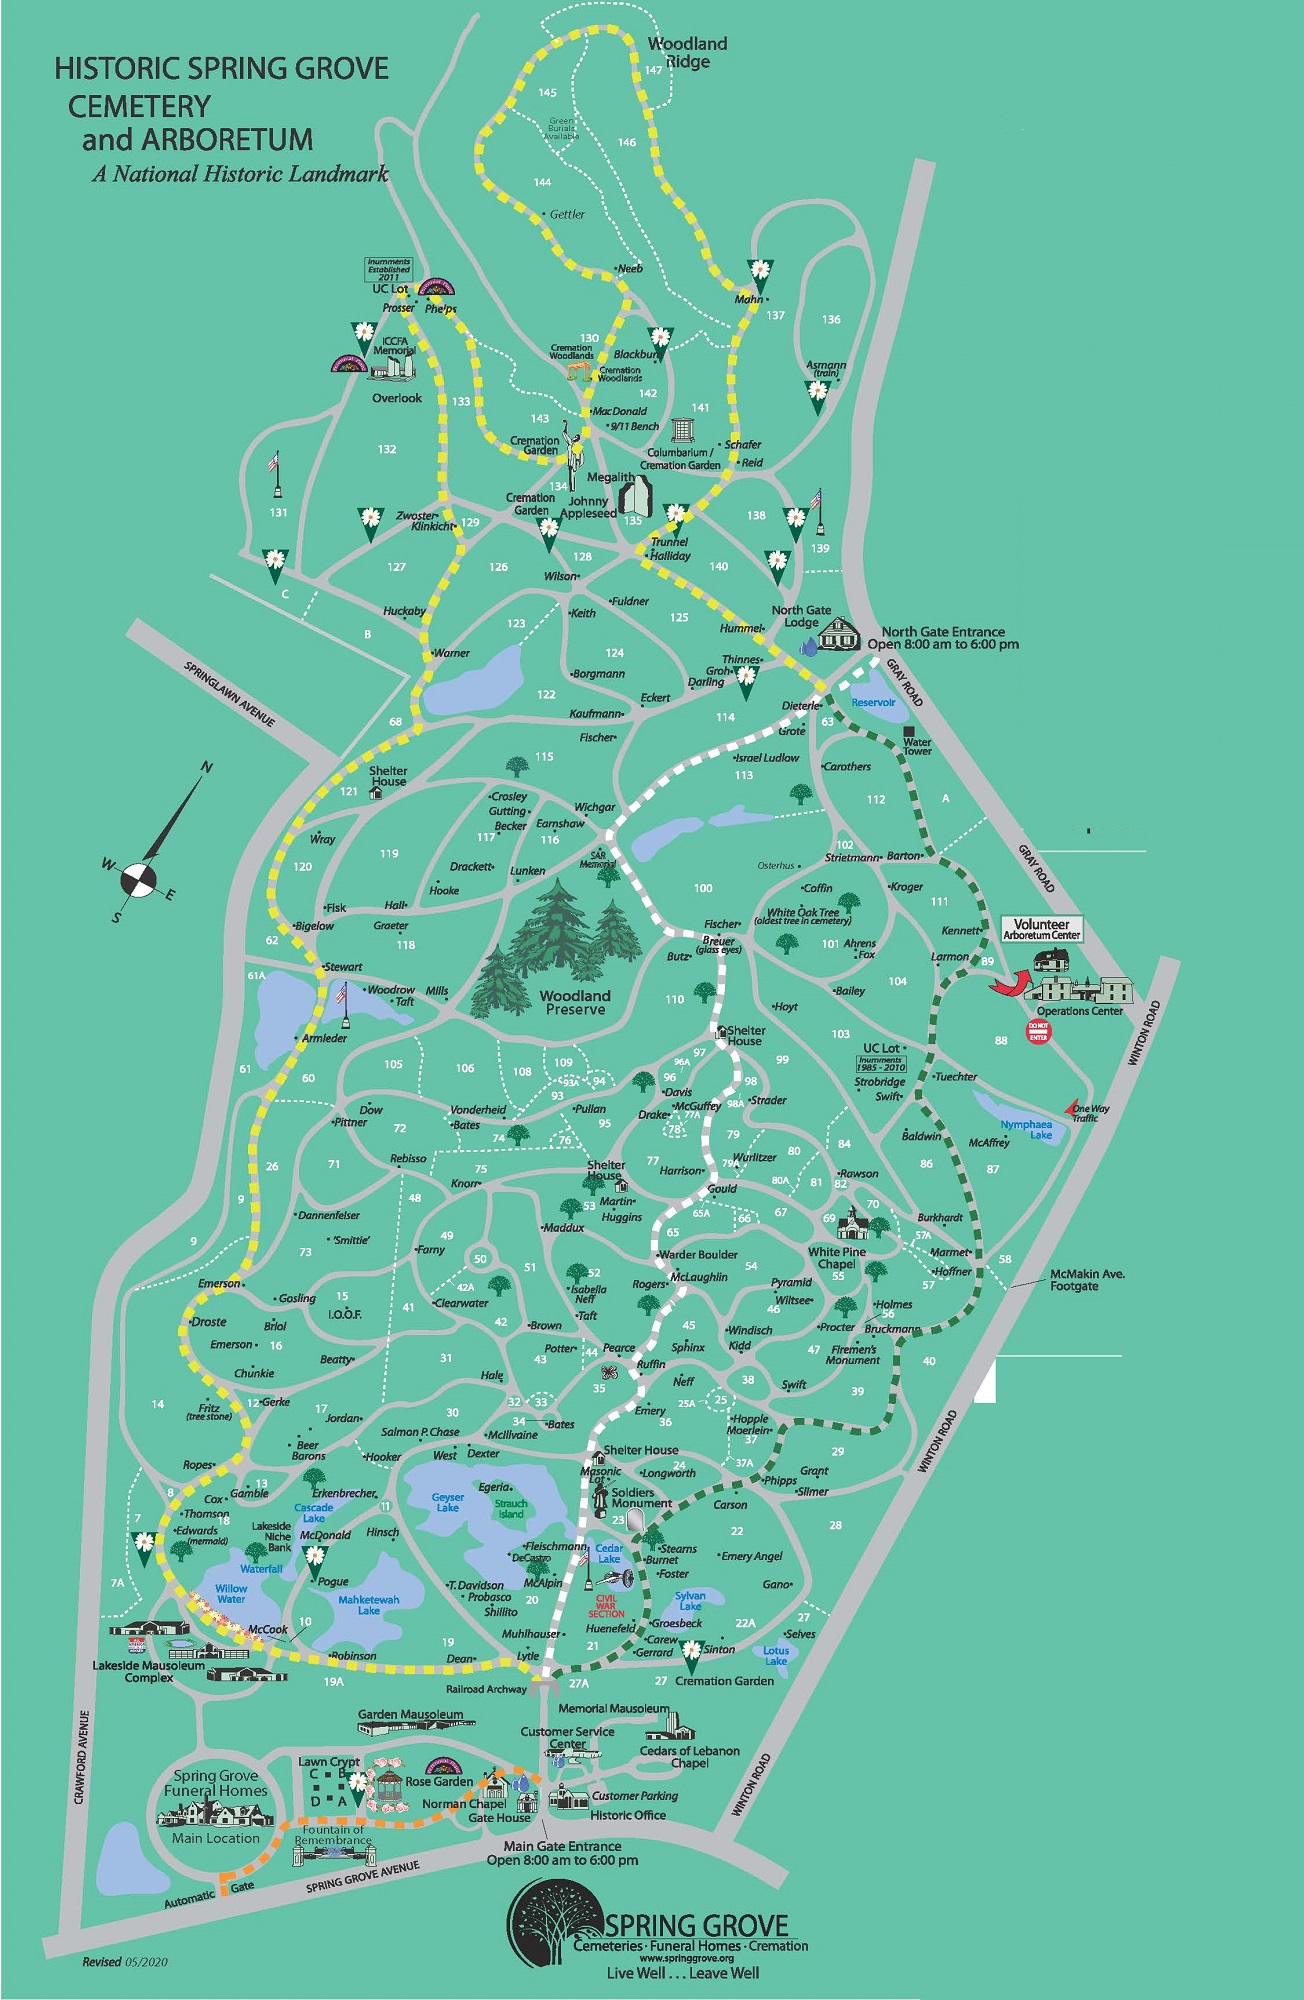 Cemetery map of Spring Grove Cemetery in Cincinnati, Ohio